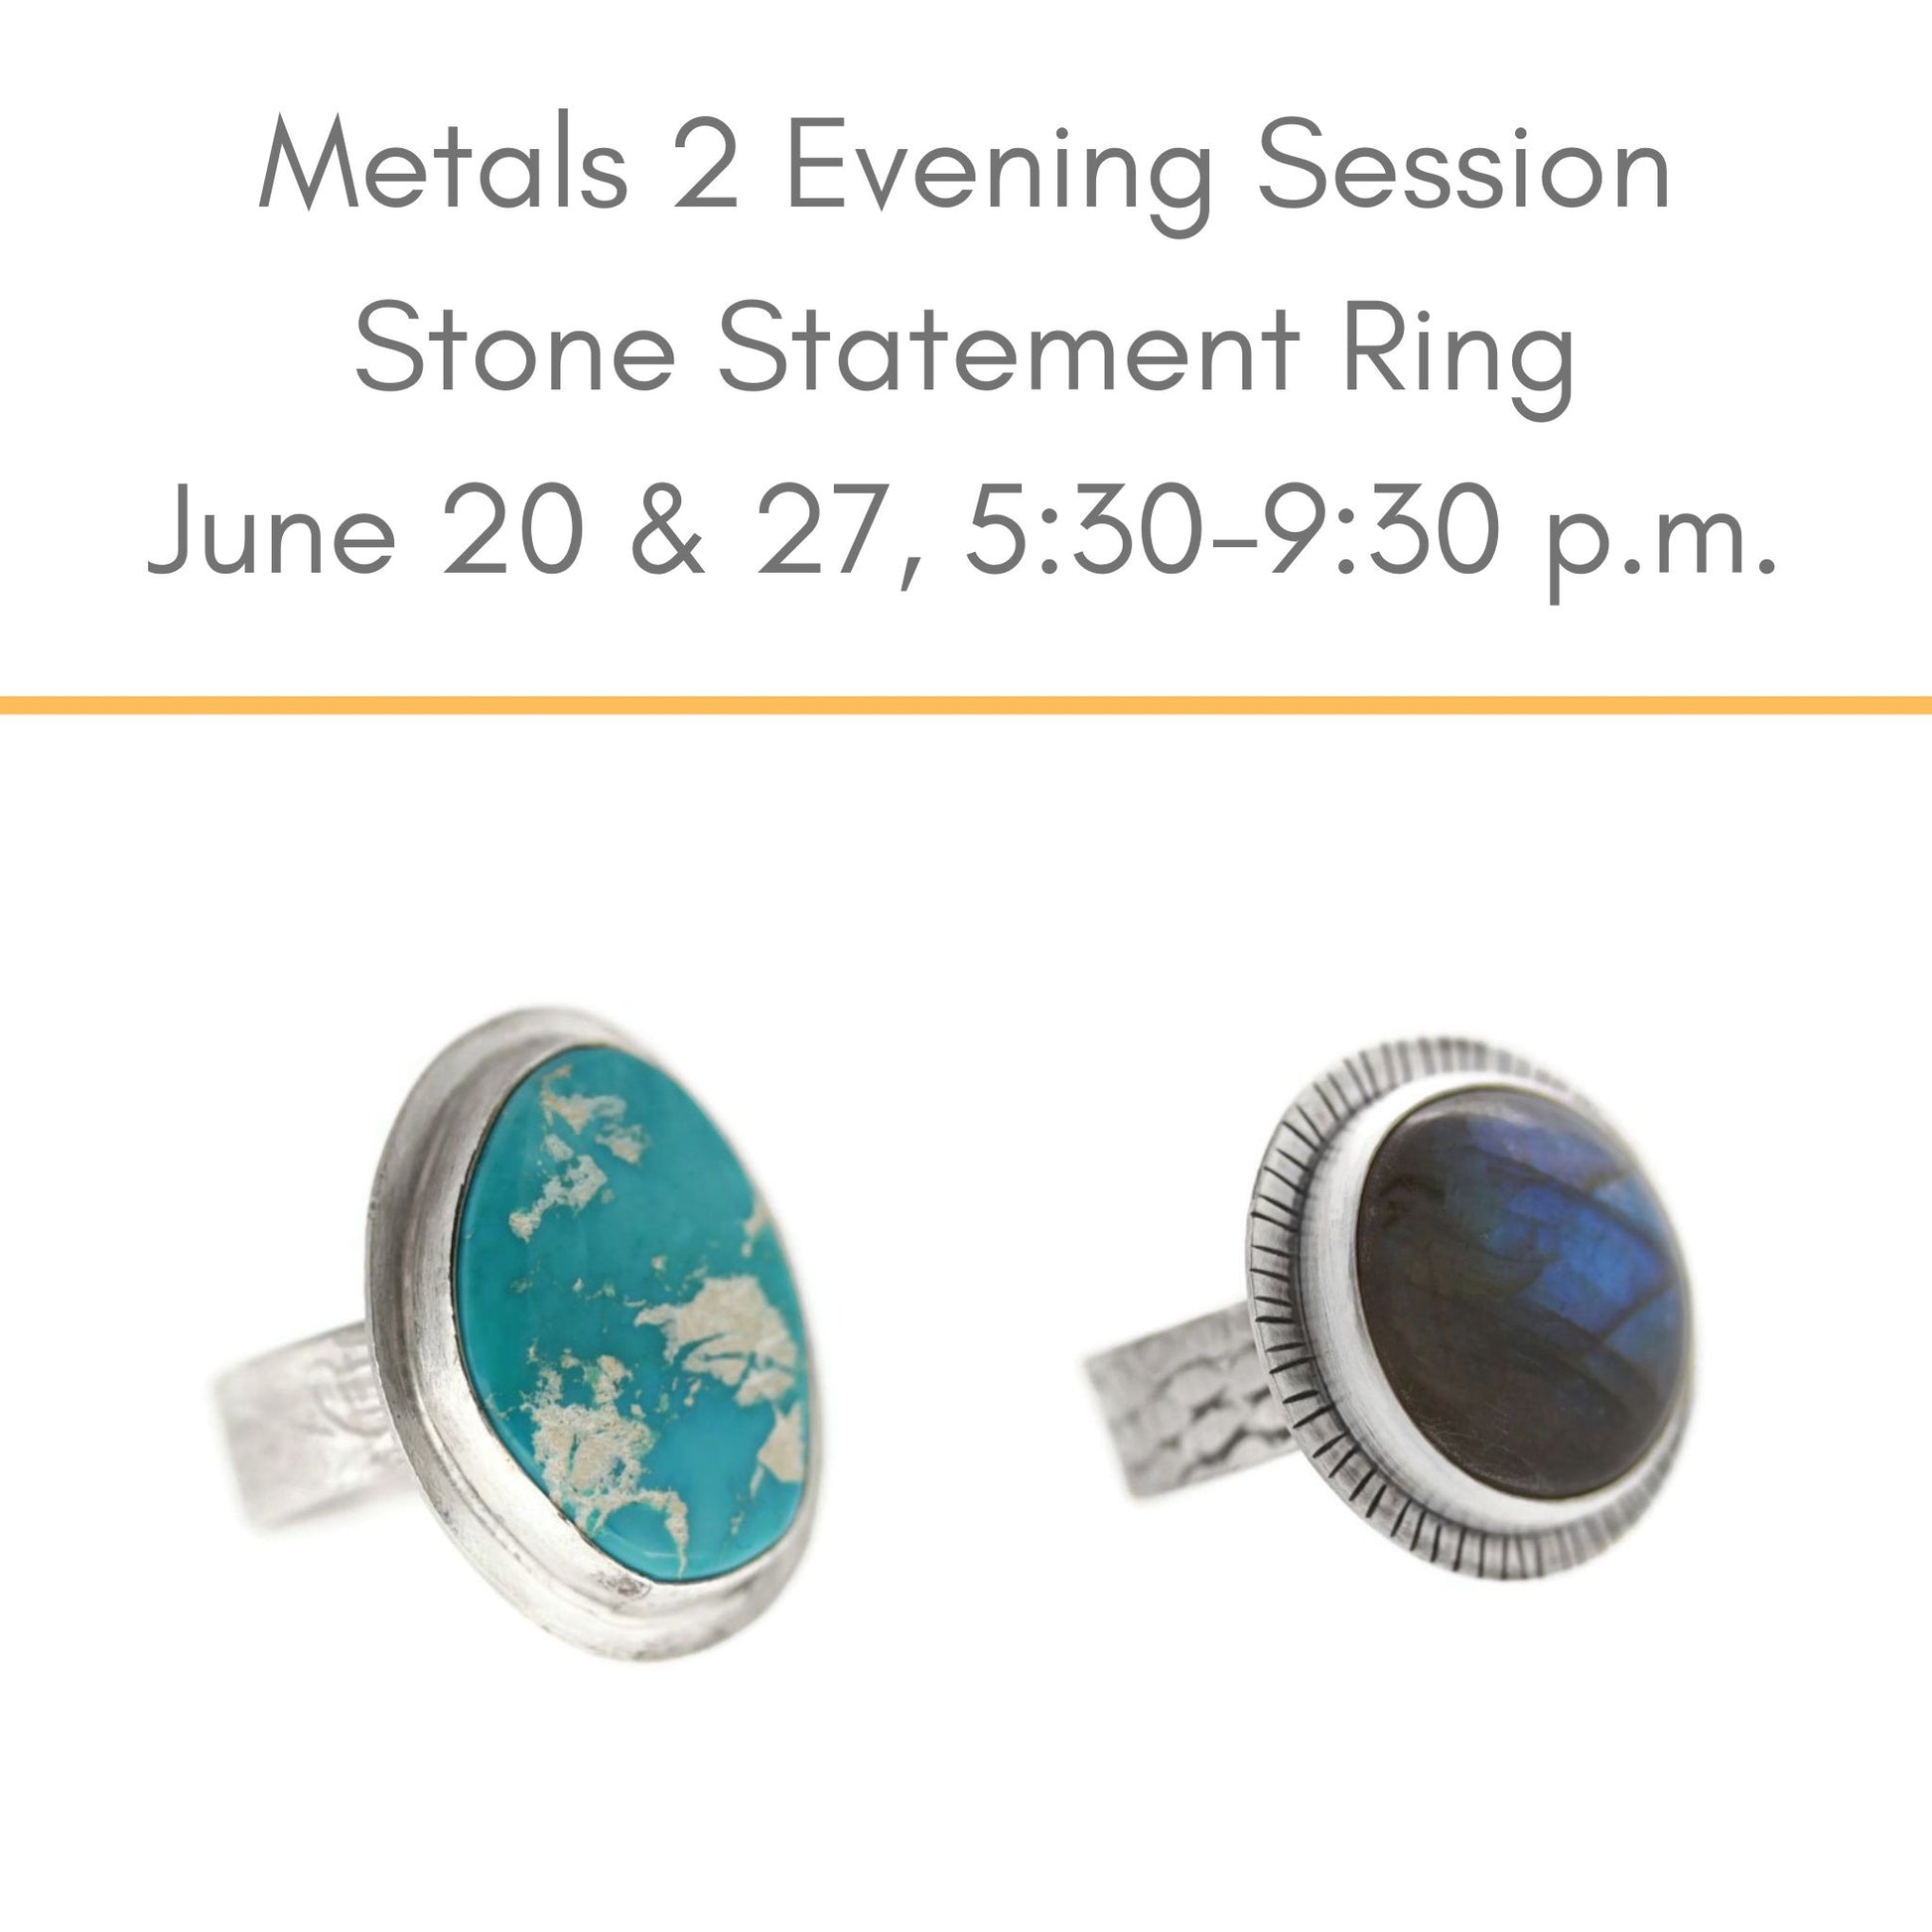 Metals 2 Stone Statement Ring class June 20 & 27 evening at Silver Peak Studio